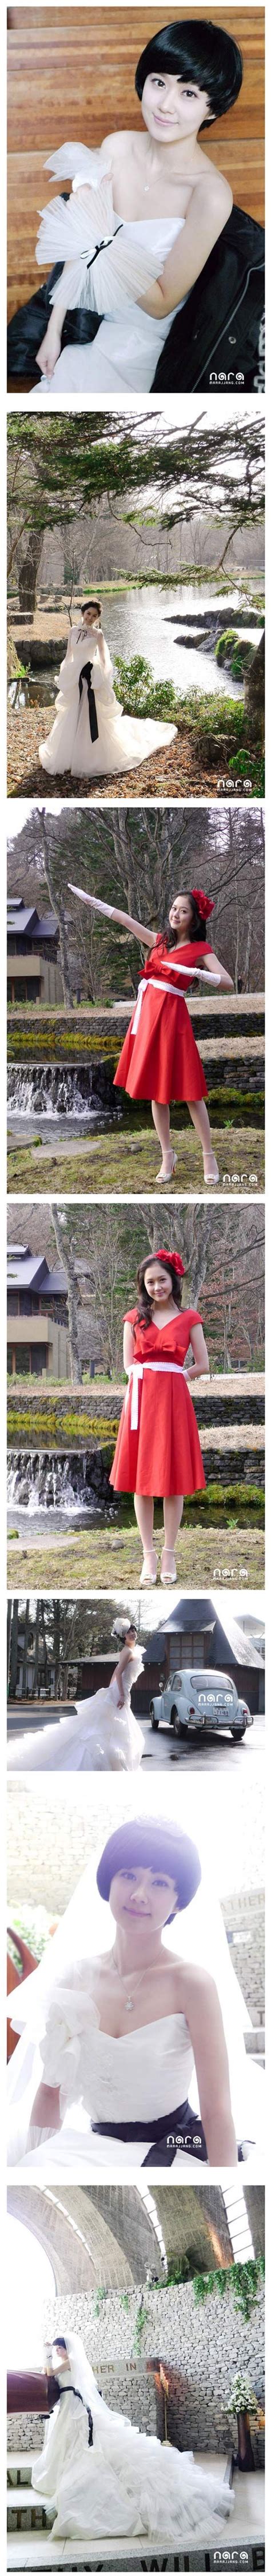 Chanmi S Star News Jang Nara In A Wedding Dress Hancinema The